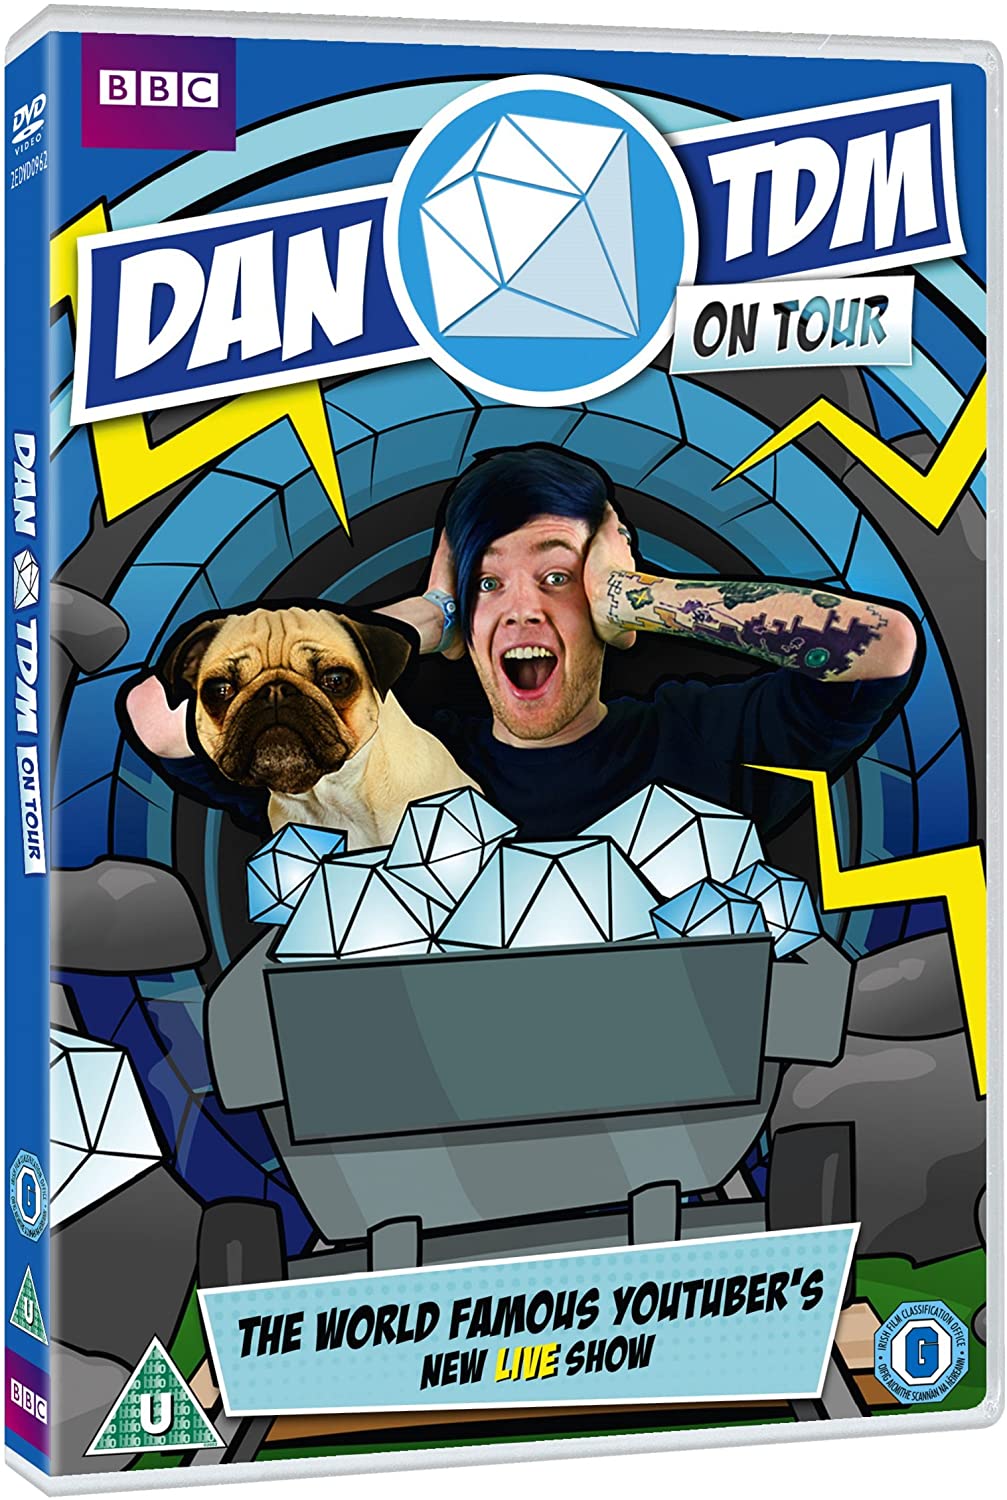 Dan TDM in tournée [DVD] [2017]